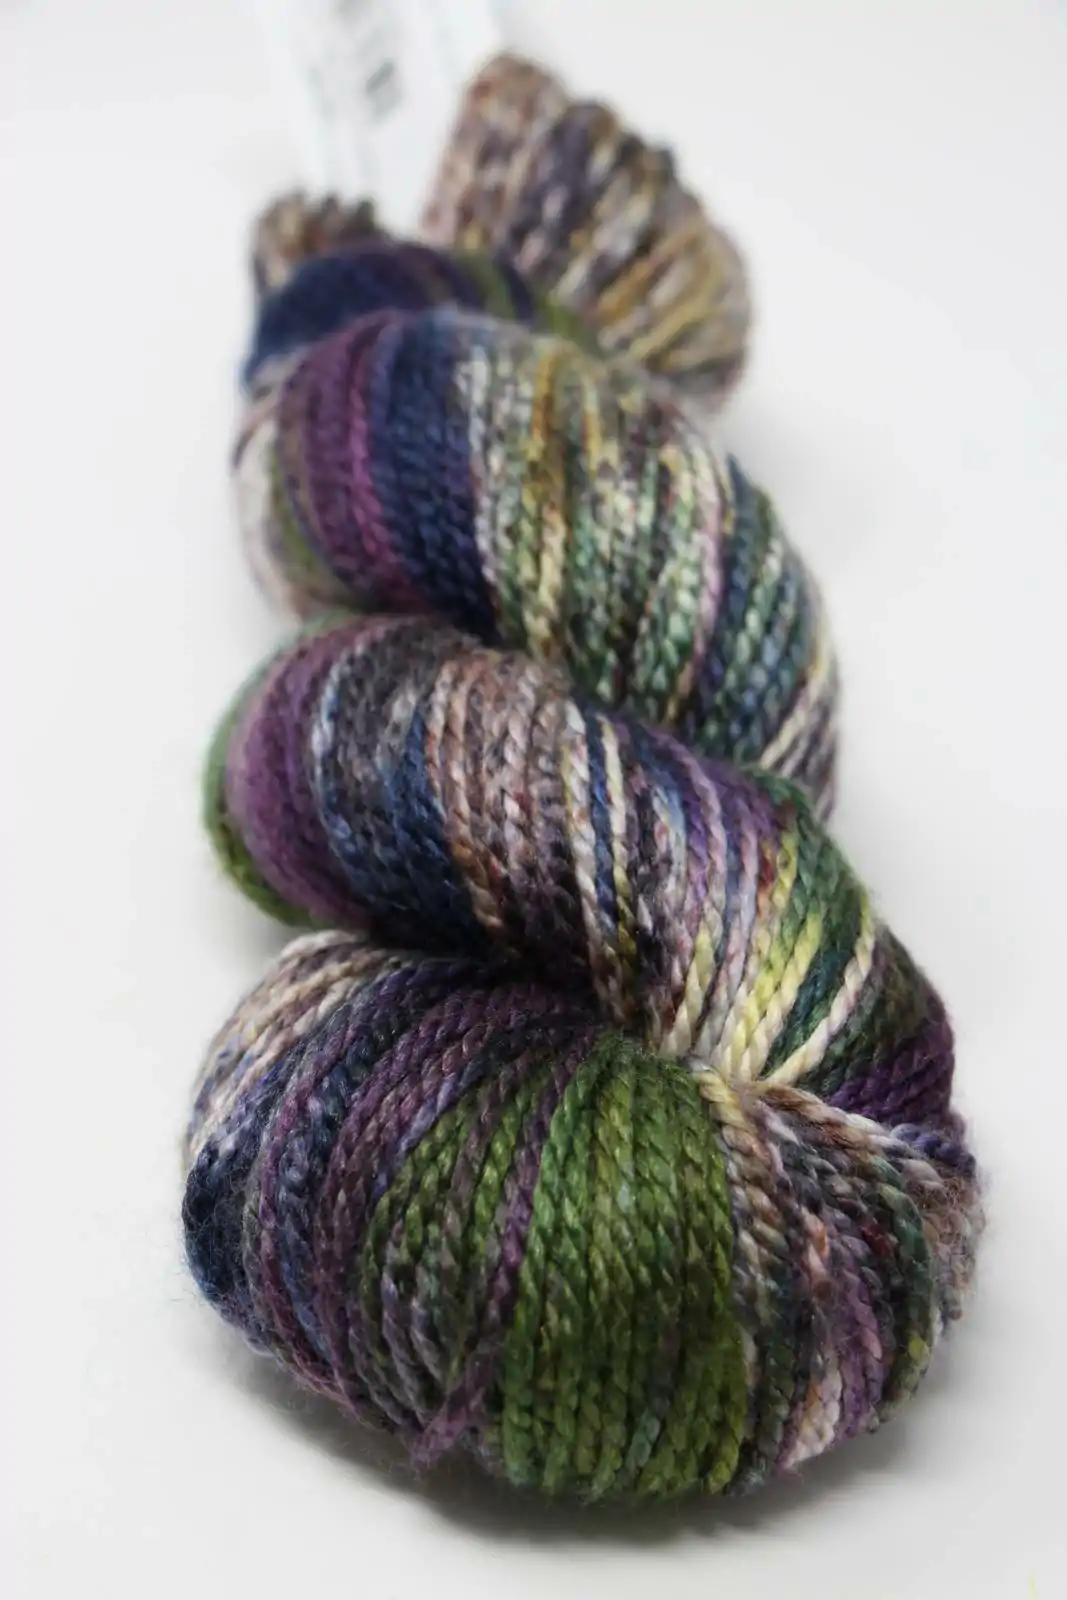 Artyarns Silky Twist Merino Silk in Blueberry Scramble (608) at Fabulous  Yarn